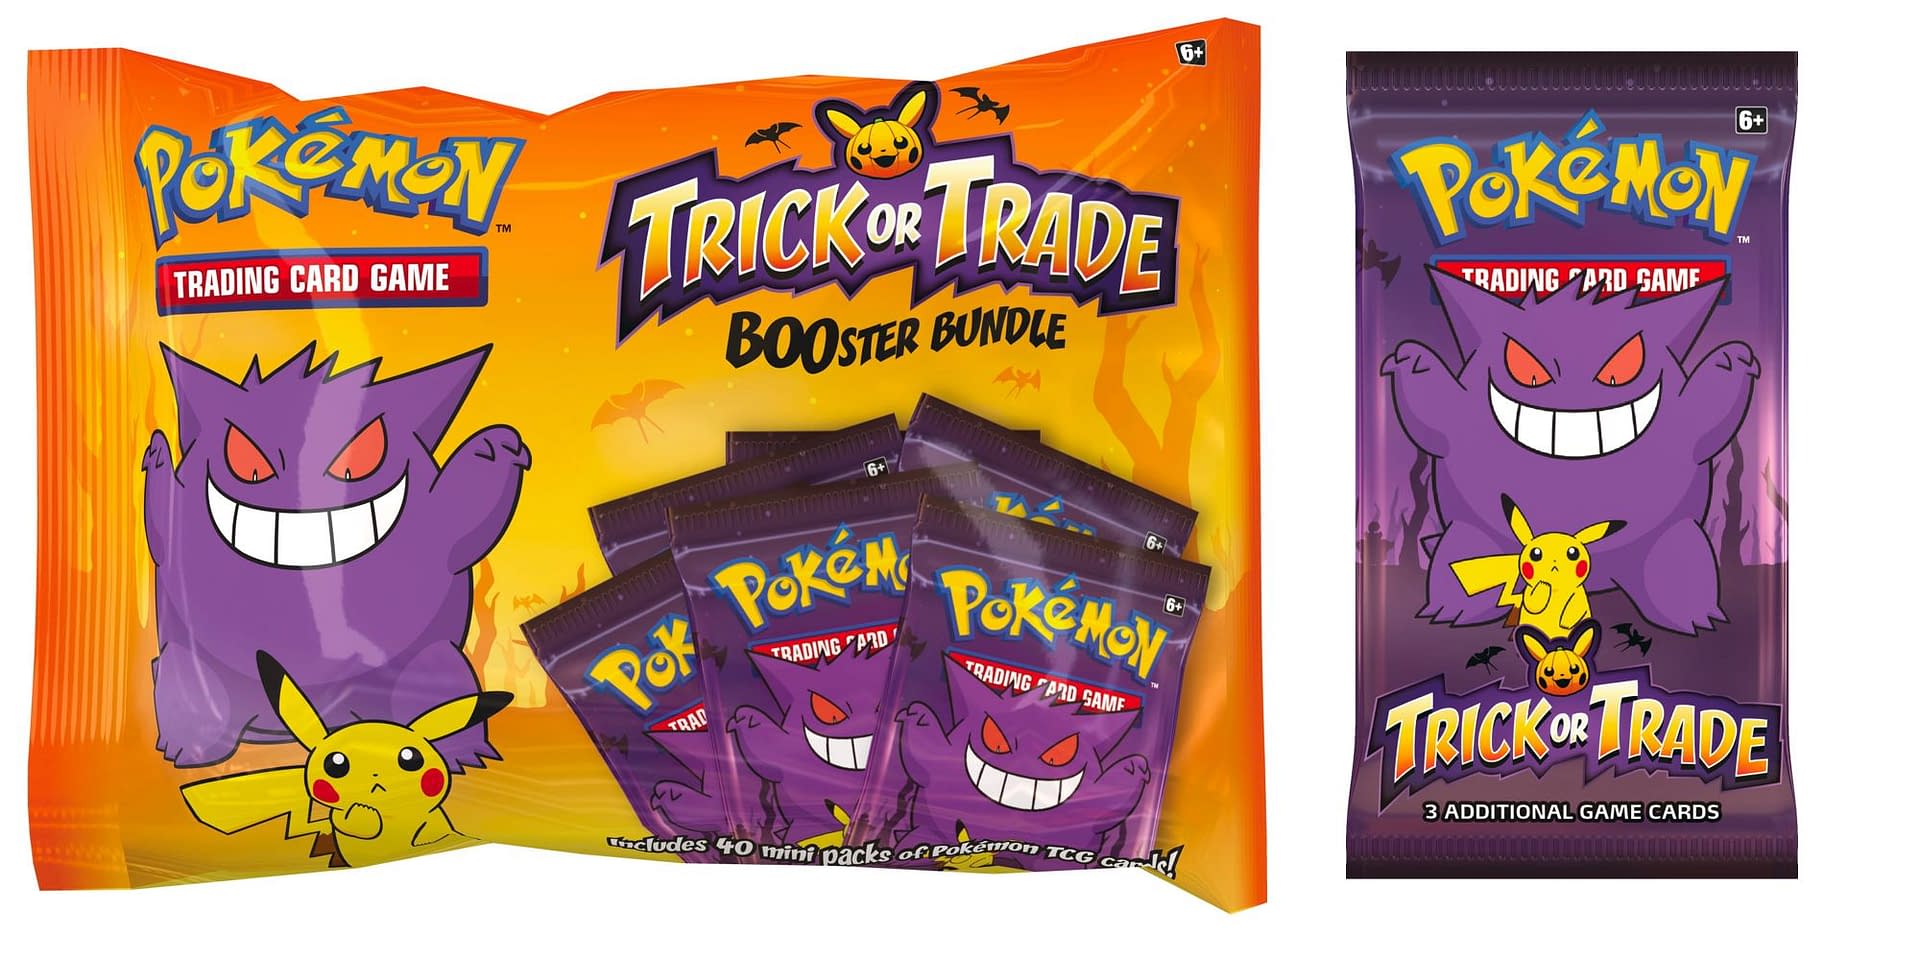 Pokémon TCG Announces Trick Or Trade Halloween BOOster Packs